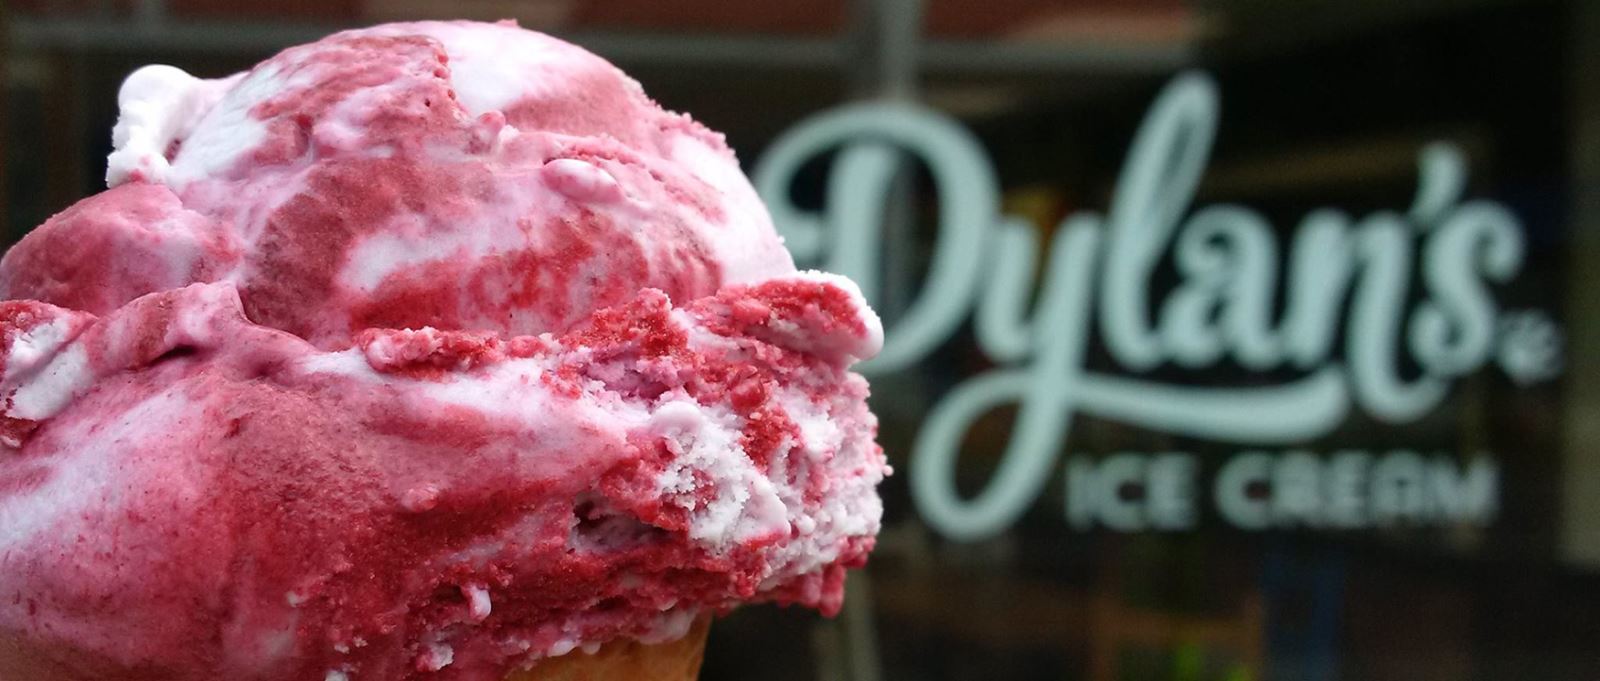 Dylan's Ice Cream